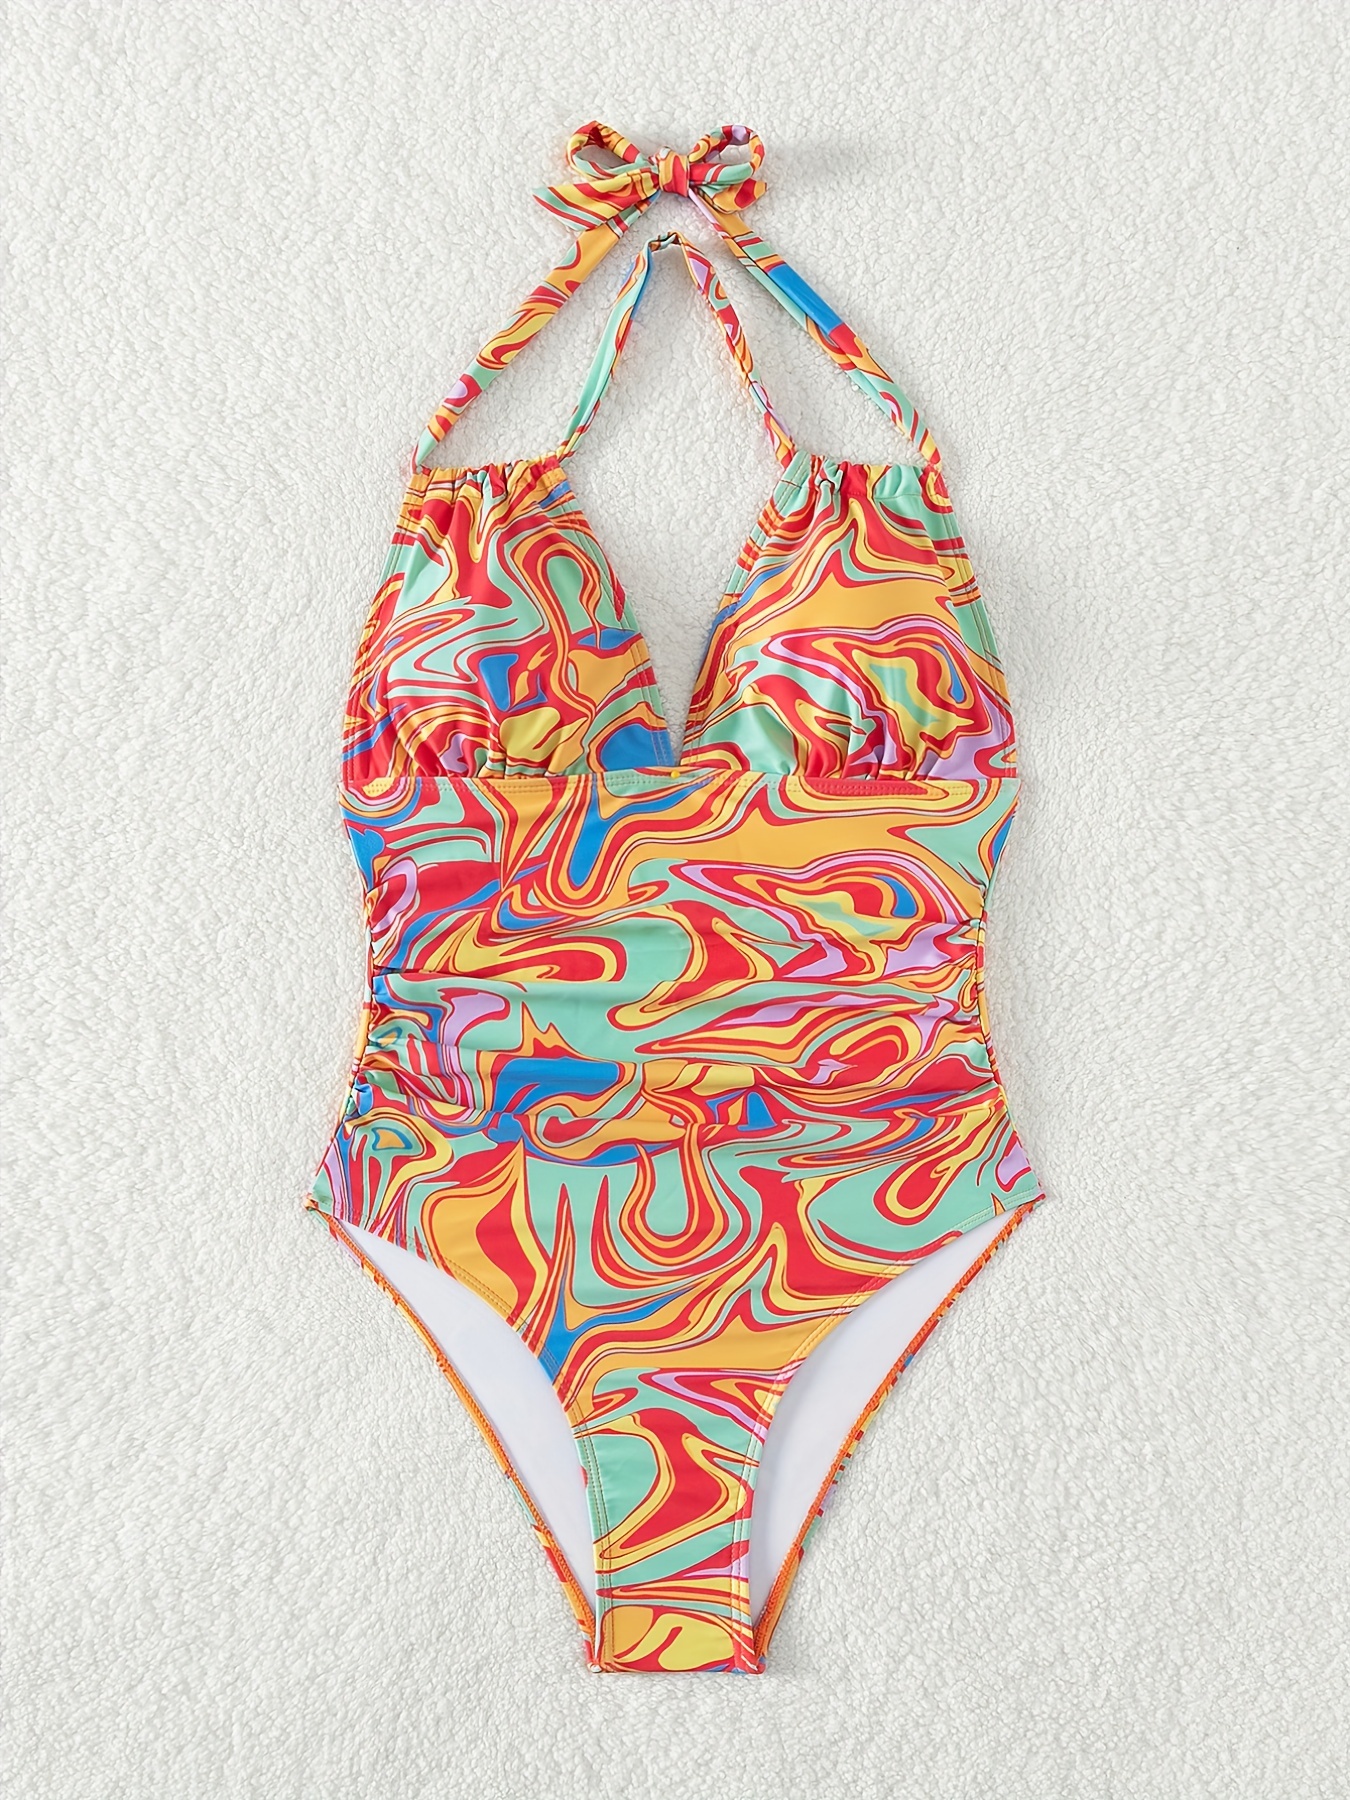 SWIMSHY Women's Tie One Piece Swimsuit Colorful Print Bathing